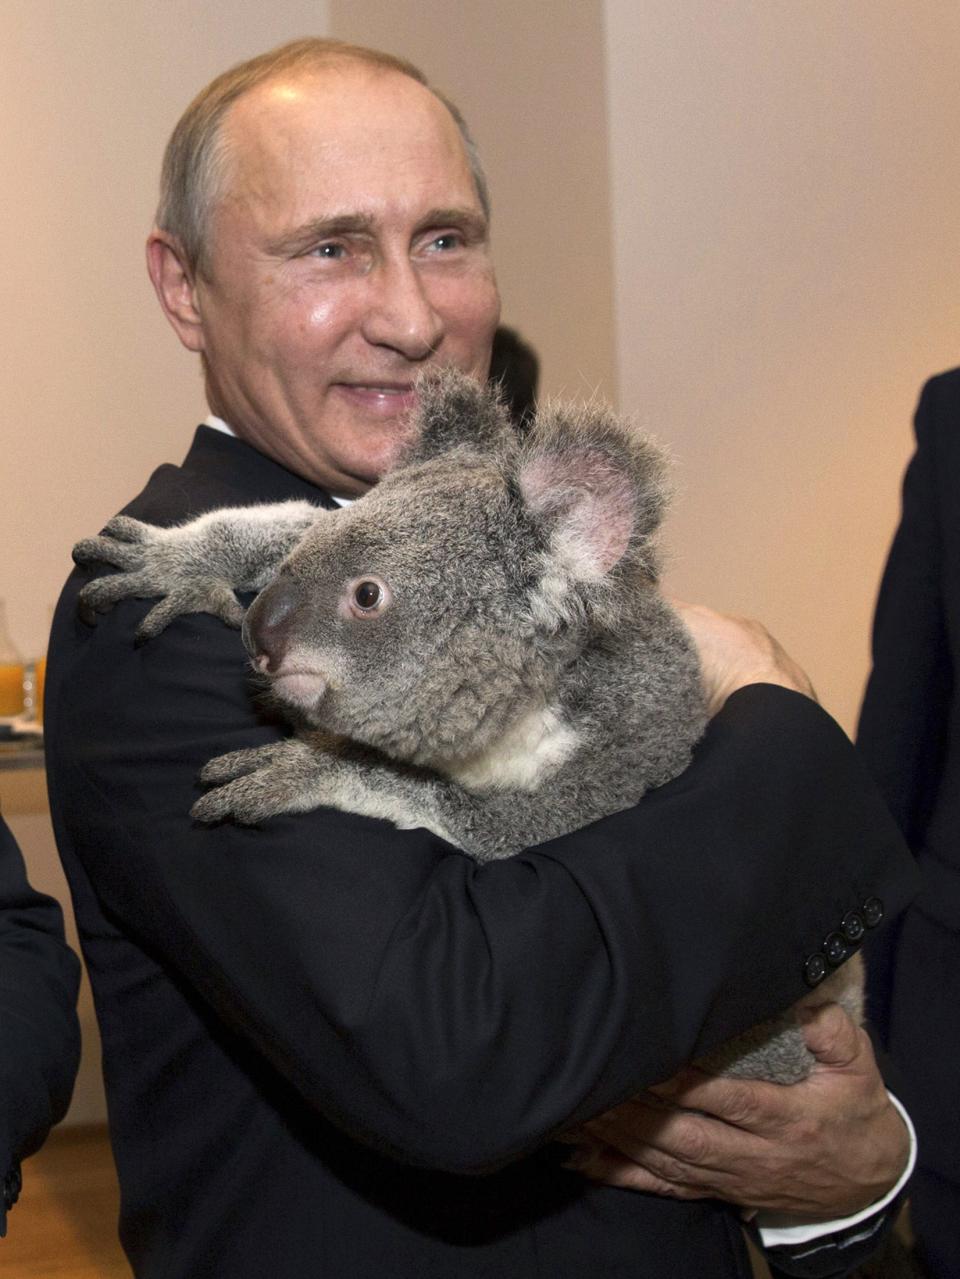 G20 Australia handout photo shows Russia's President Putin holding a koala before the G20 Leaders' Summit in Brisbane